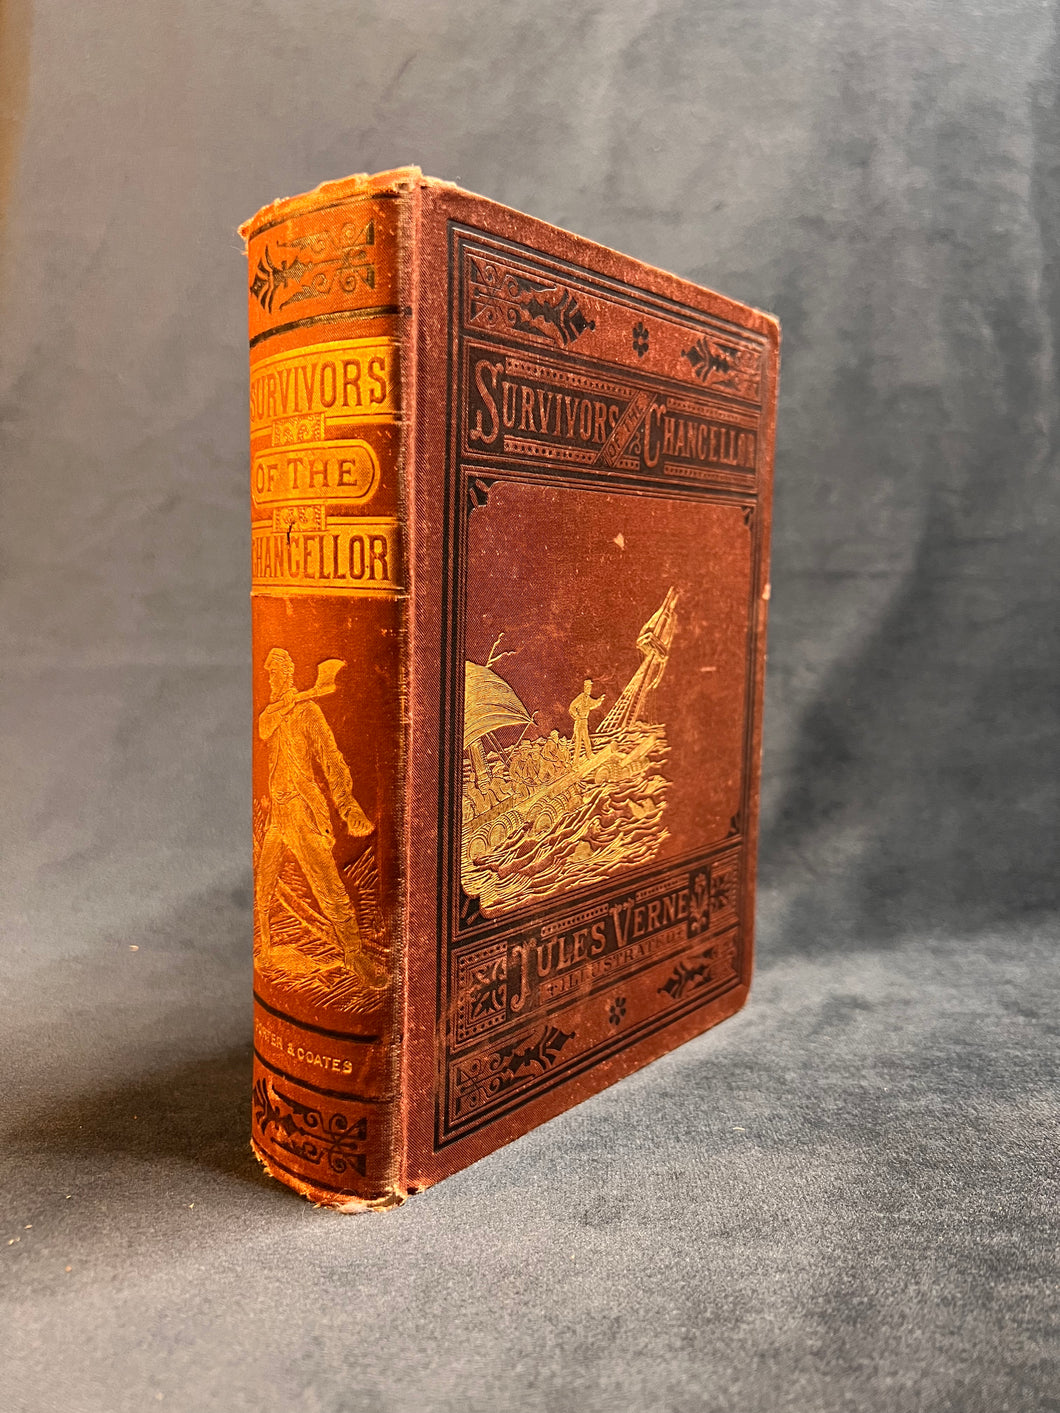 Jules Verne with Publisher’s Error: Jules Verne - Survivors of the Chancellor & Martin Paz (1876)